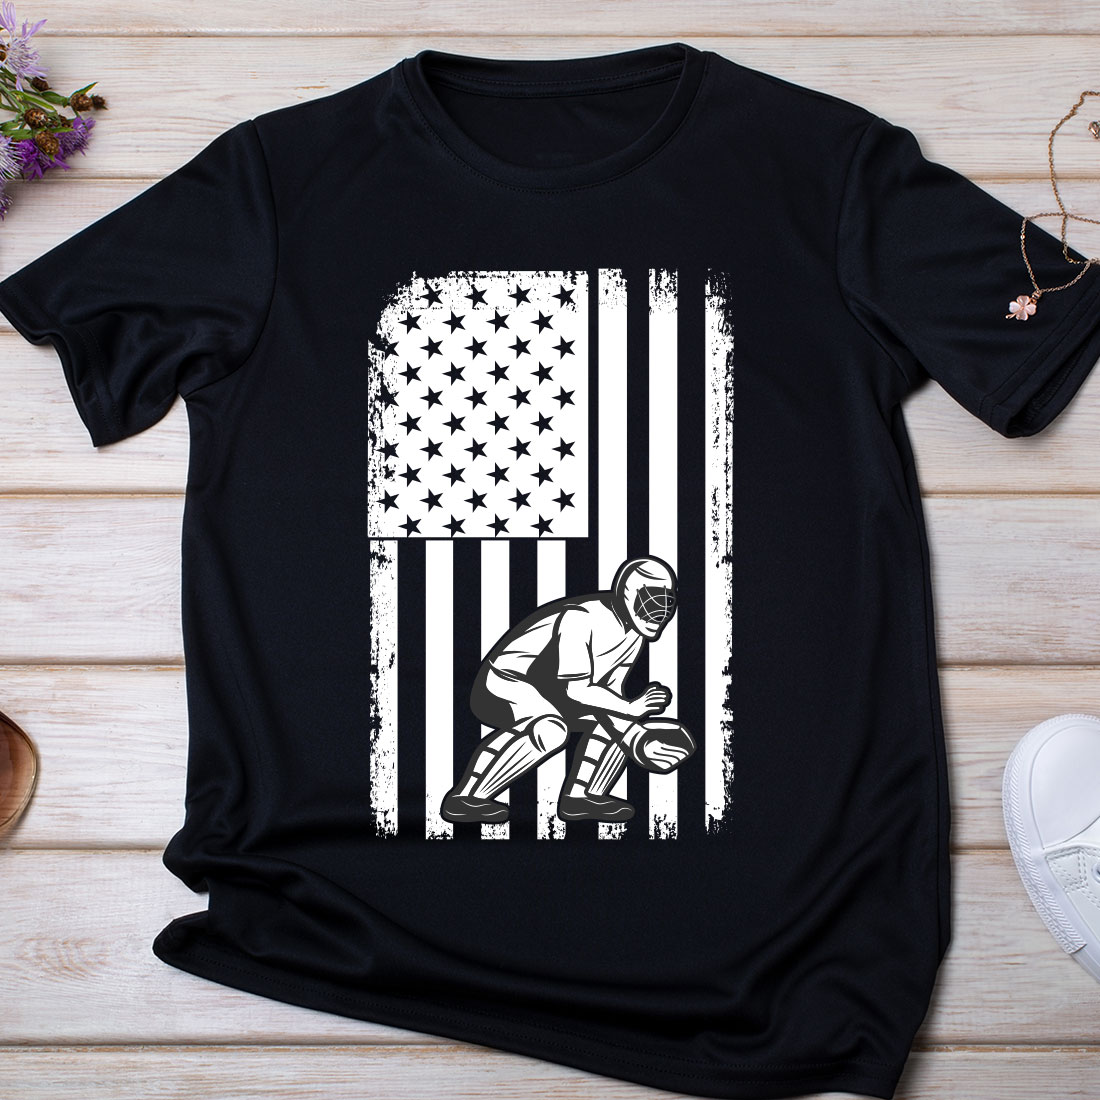 Funny Baseball T-Shirts & T-Shirt Designs